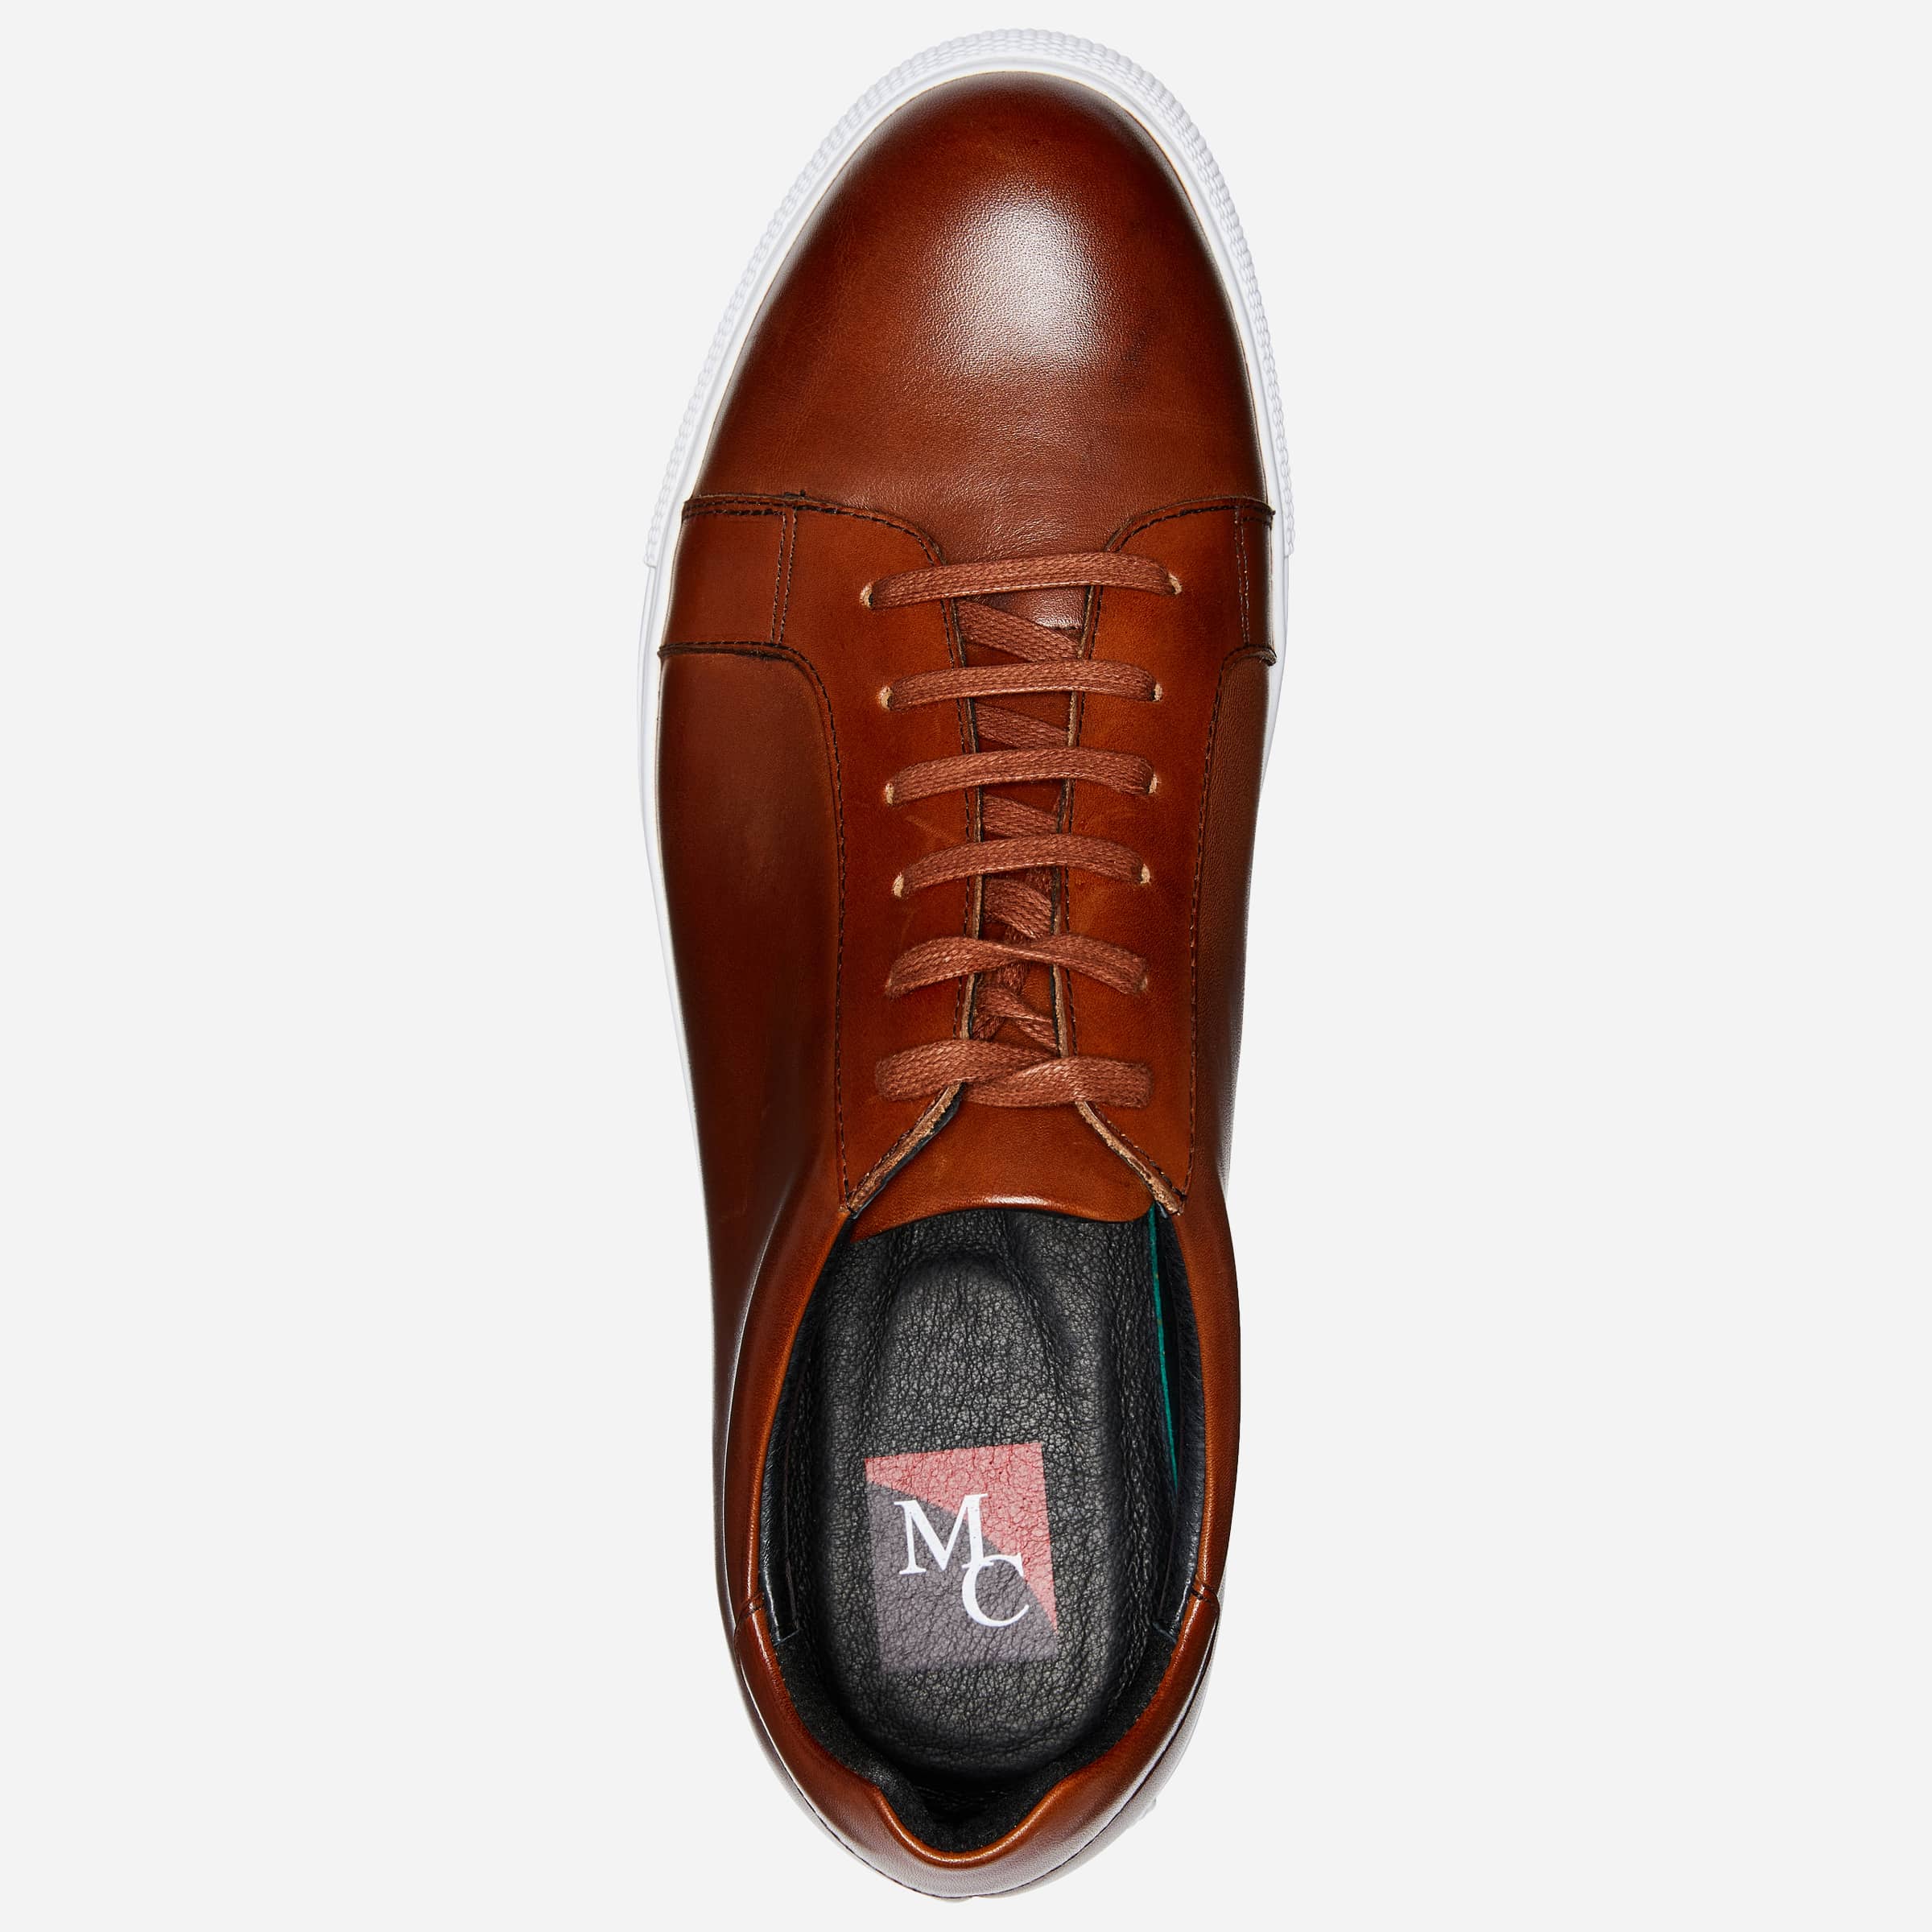 Grove Brown Sneaker - Men's Shoes at Menzclub